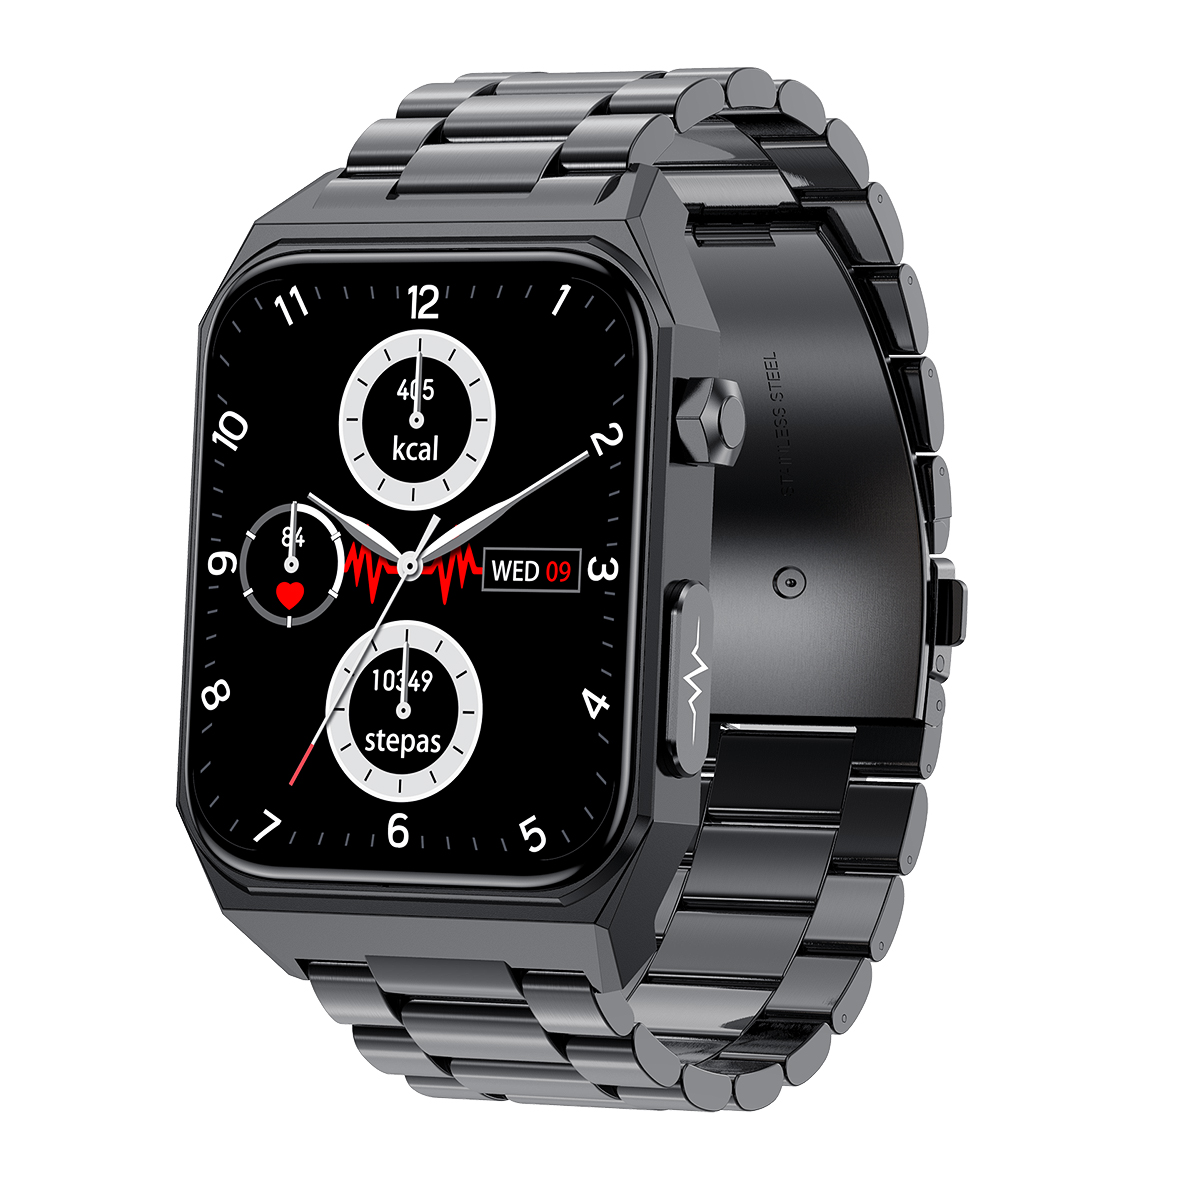 New Design Promotion Gift Smart Watch with ECG HR BP for Senior Fitness Moitoring E530